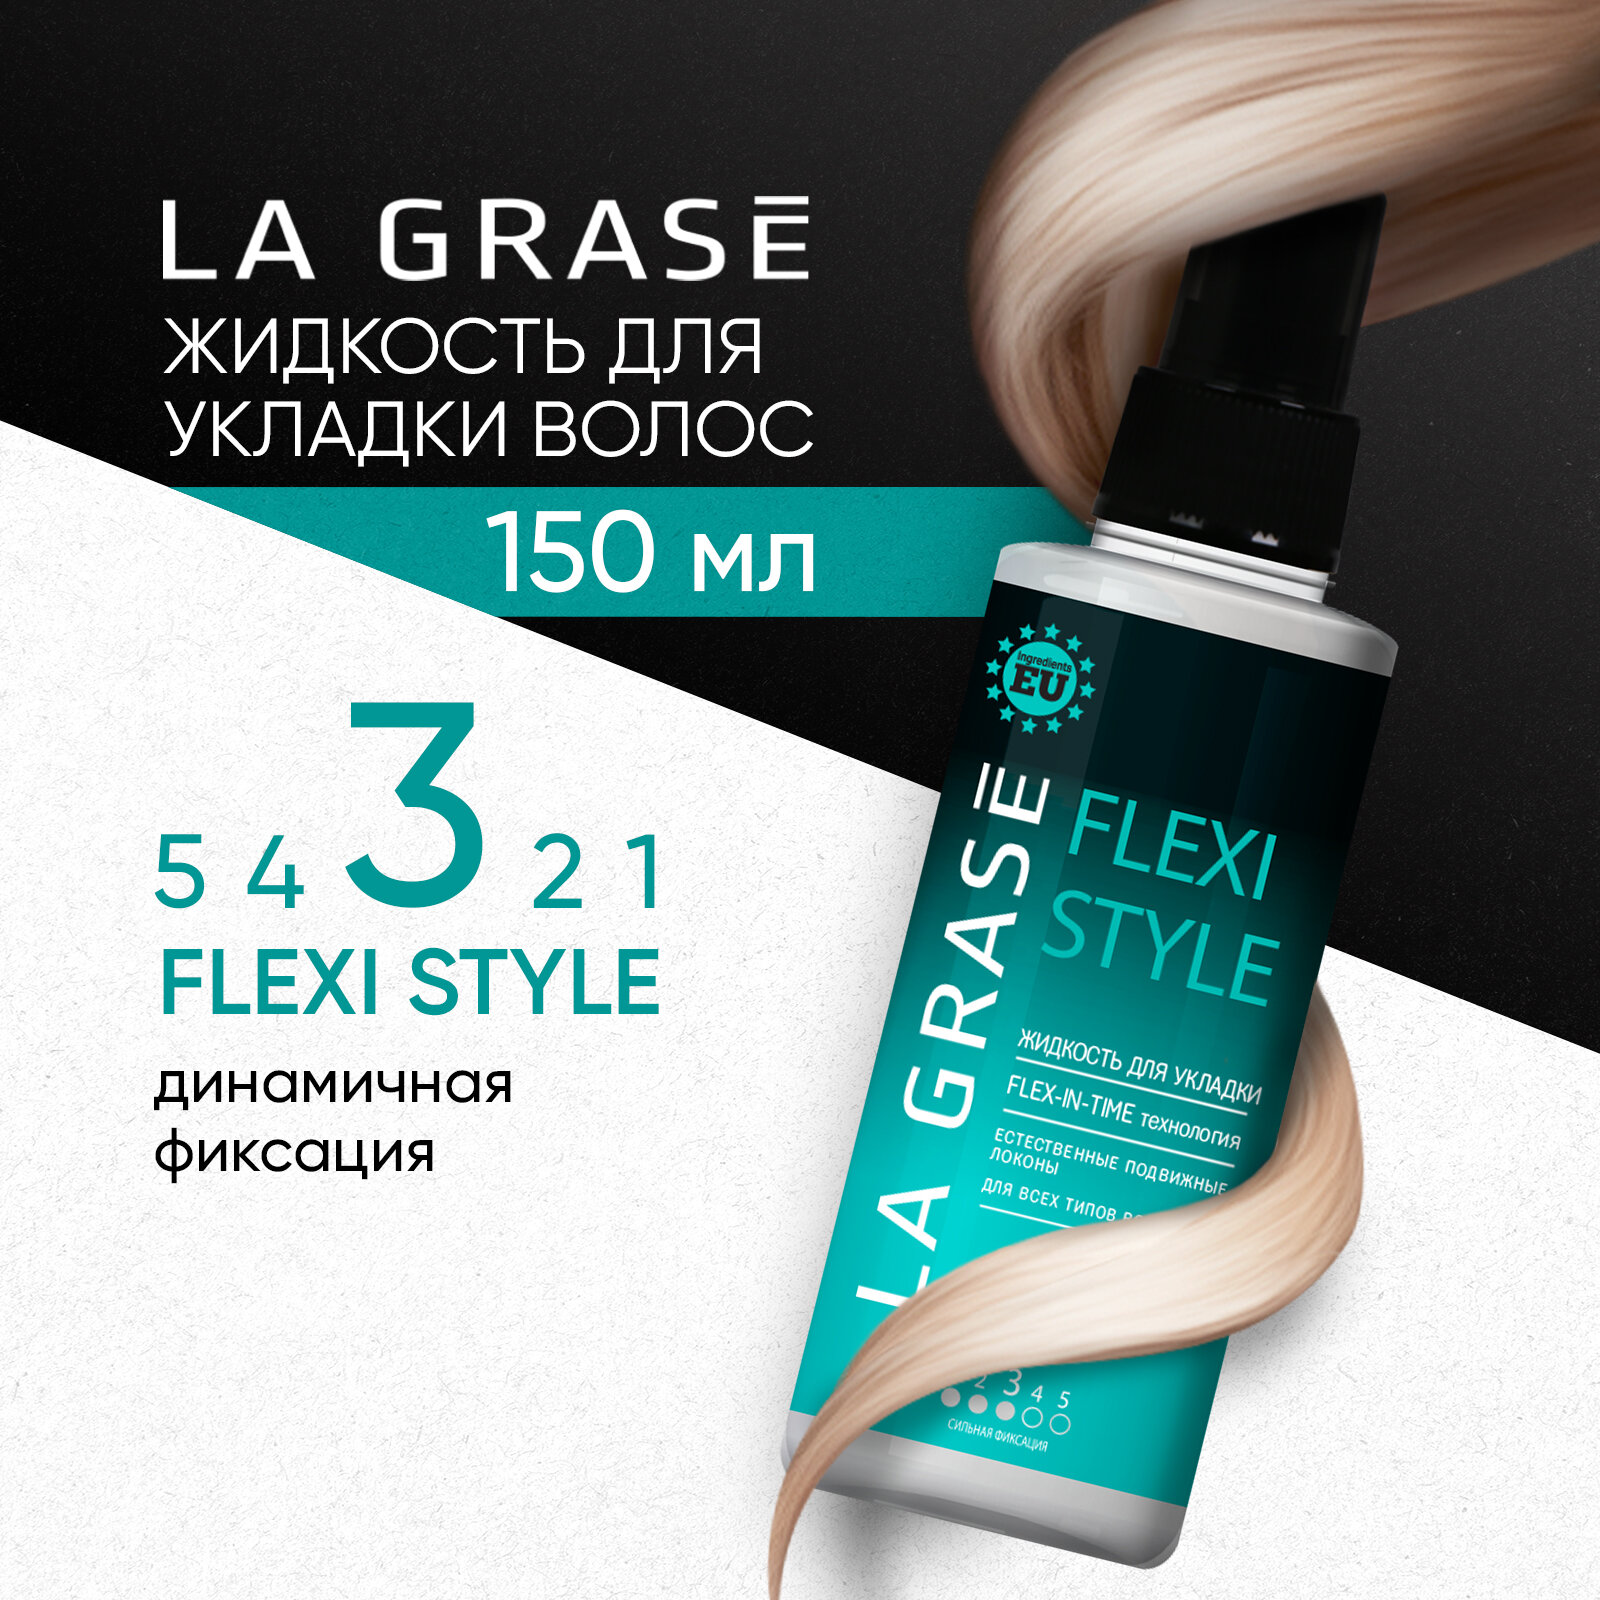 Жидкость для укладки волос La Grase Flexi Style Сильная фиксация 150мл - фото №1